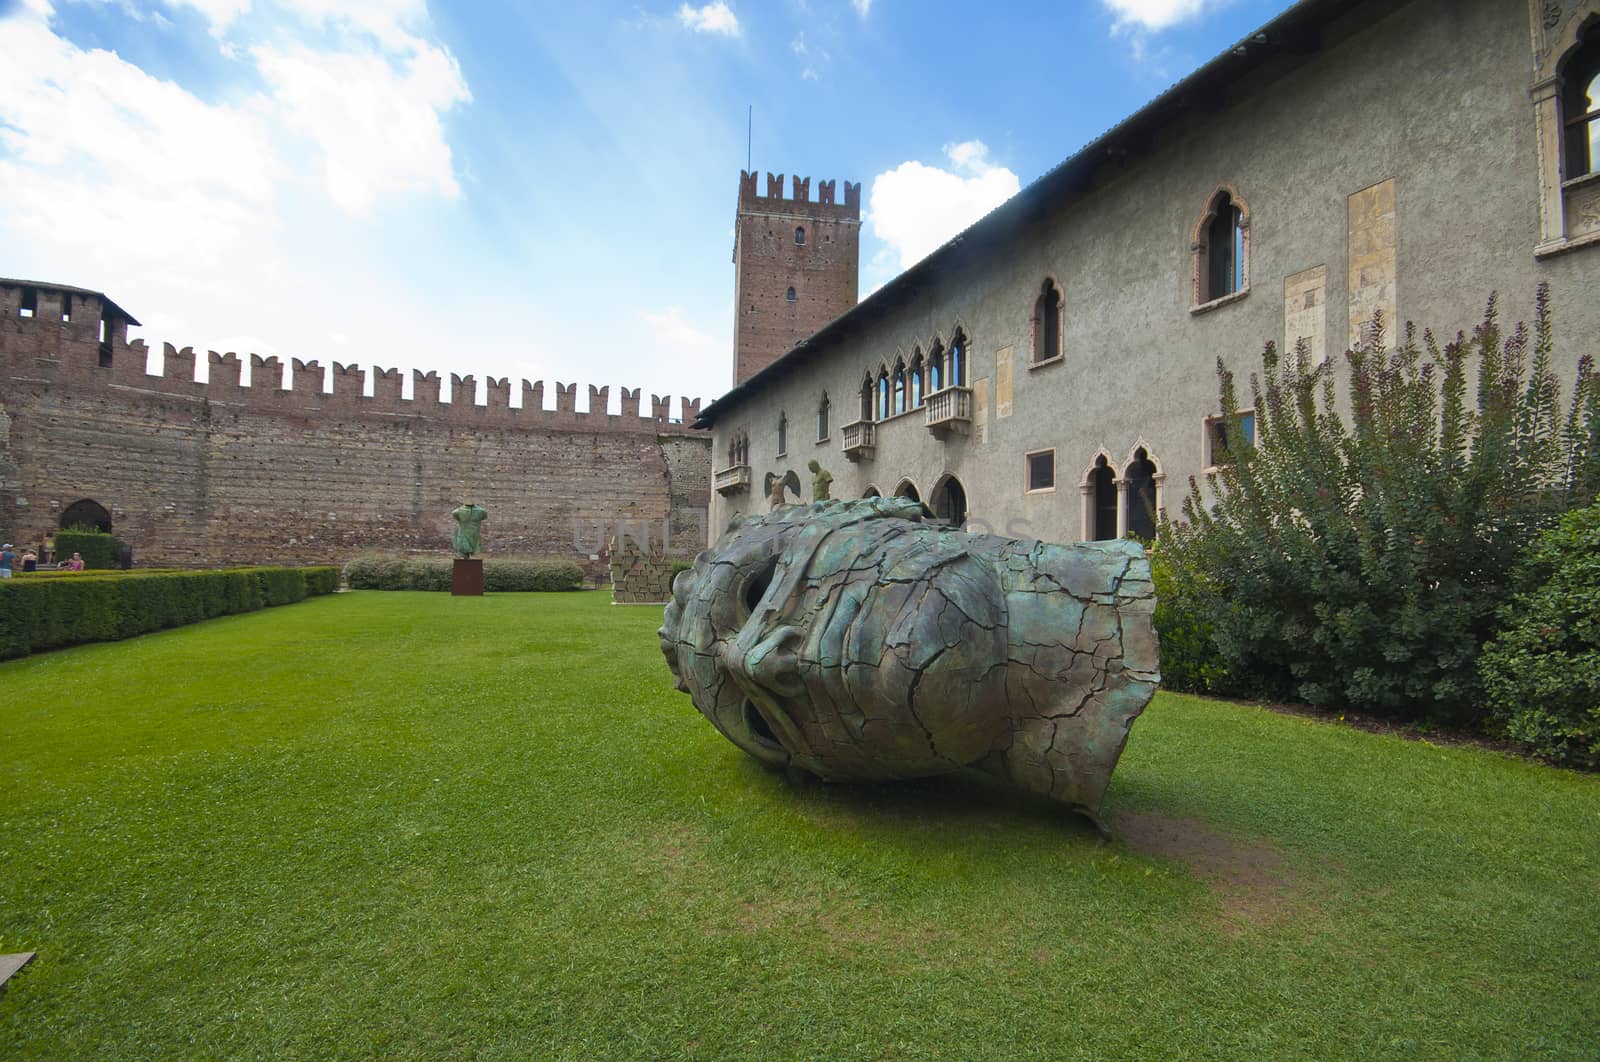 One of Igor Mitoraj's sculptures in the inner yard of Castelvecchio. Italy